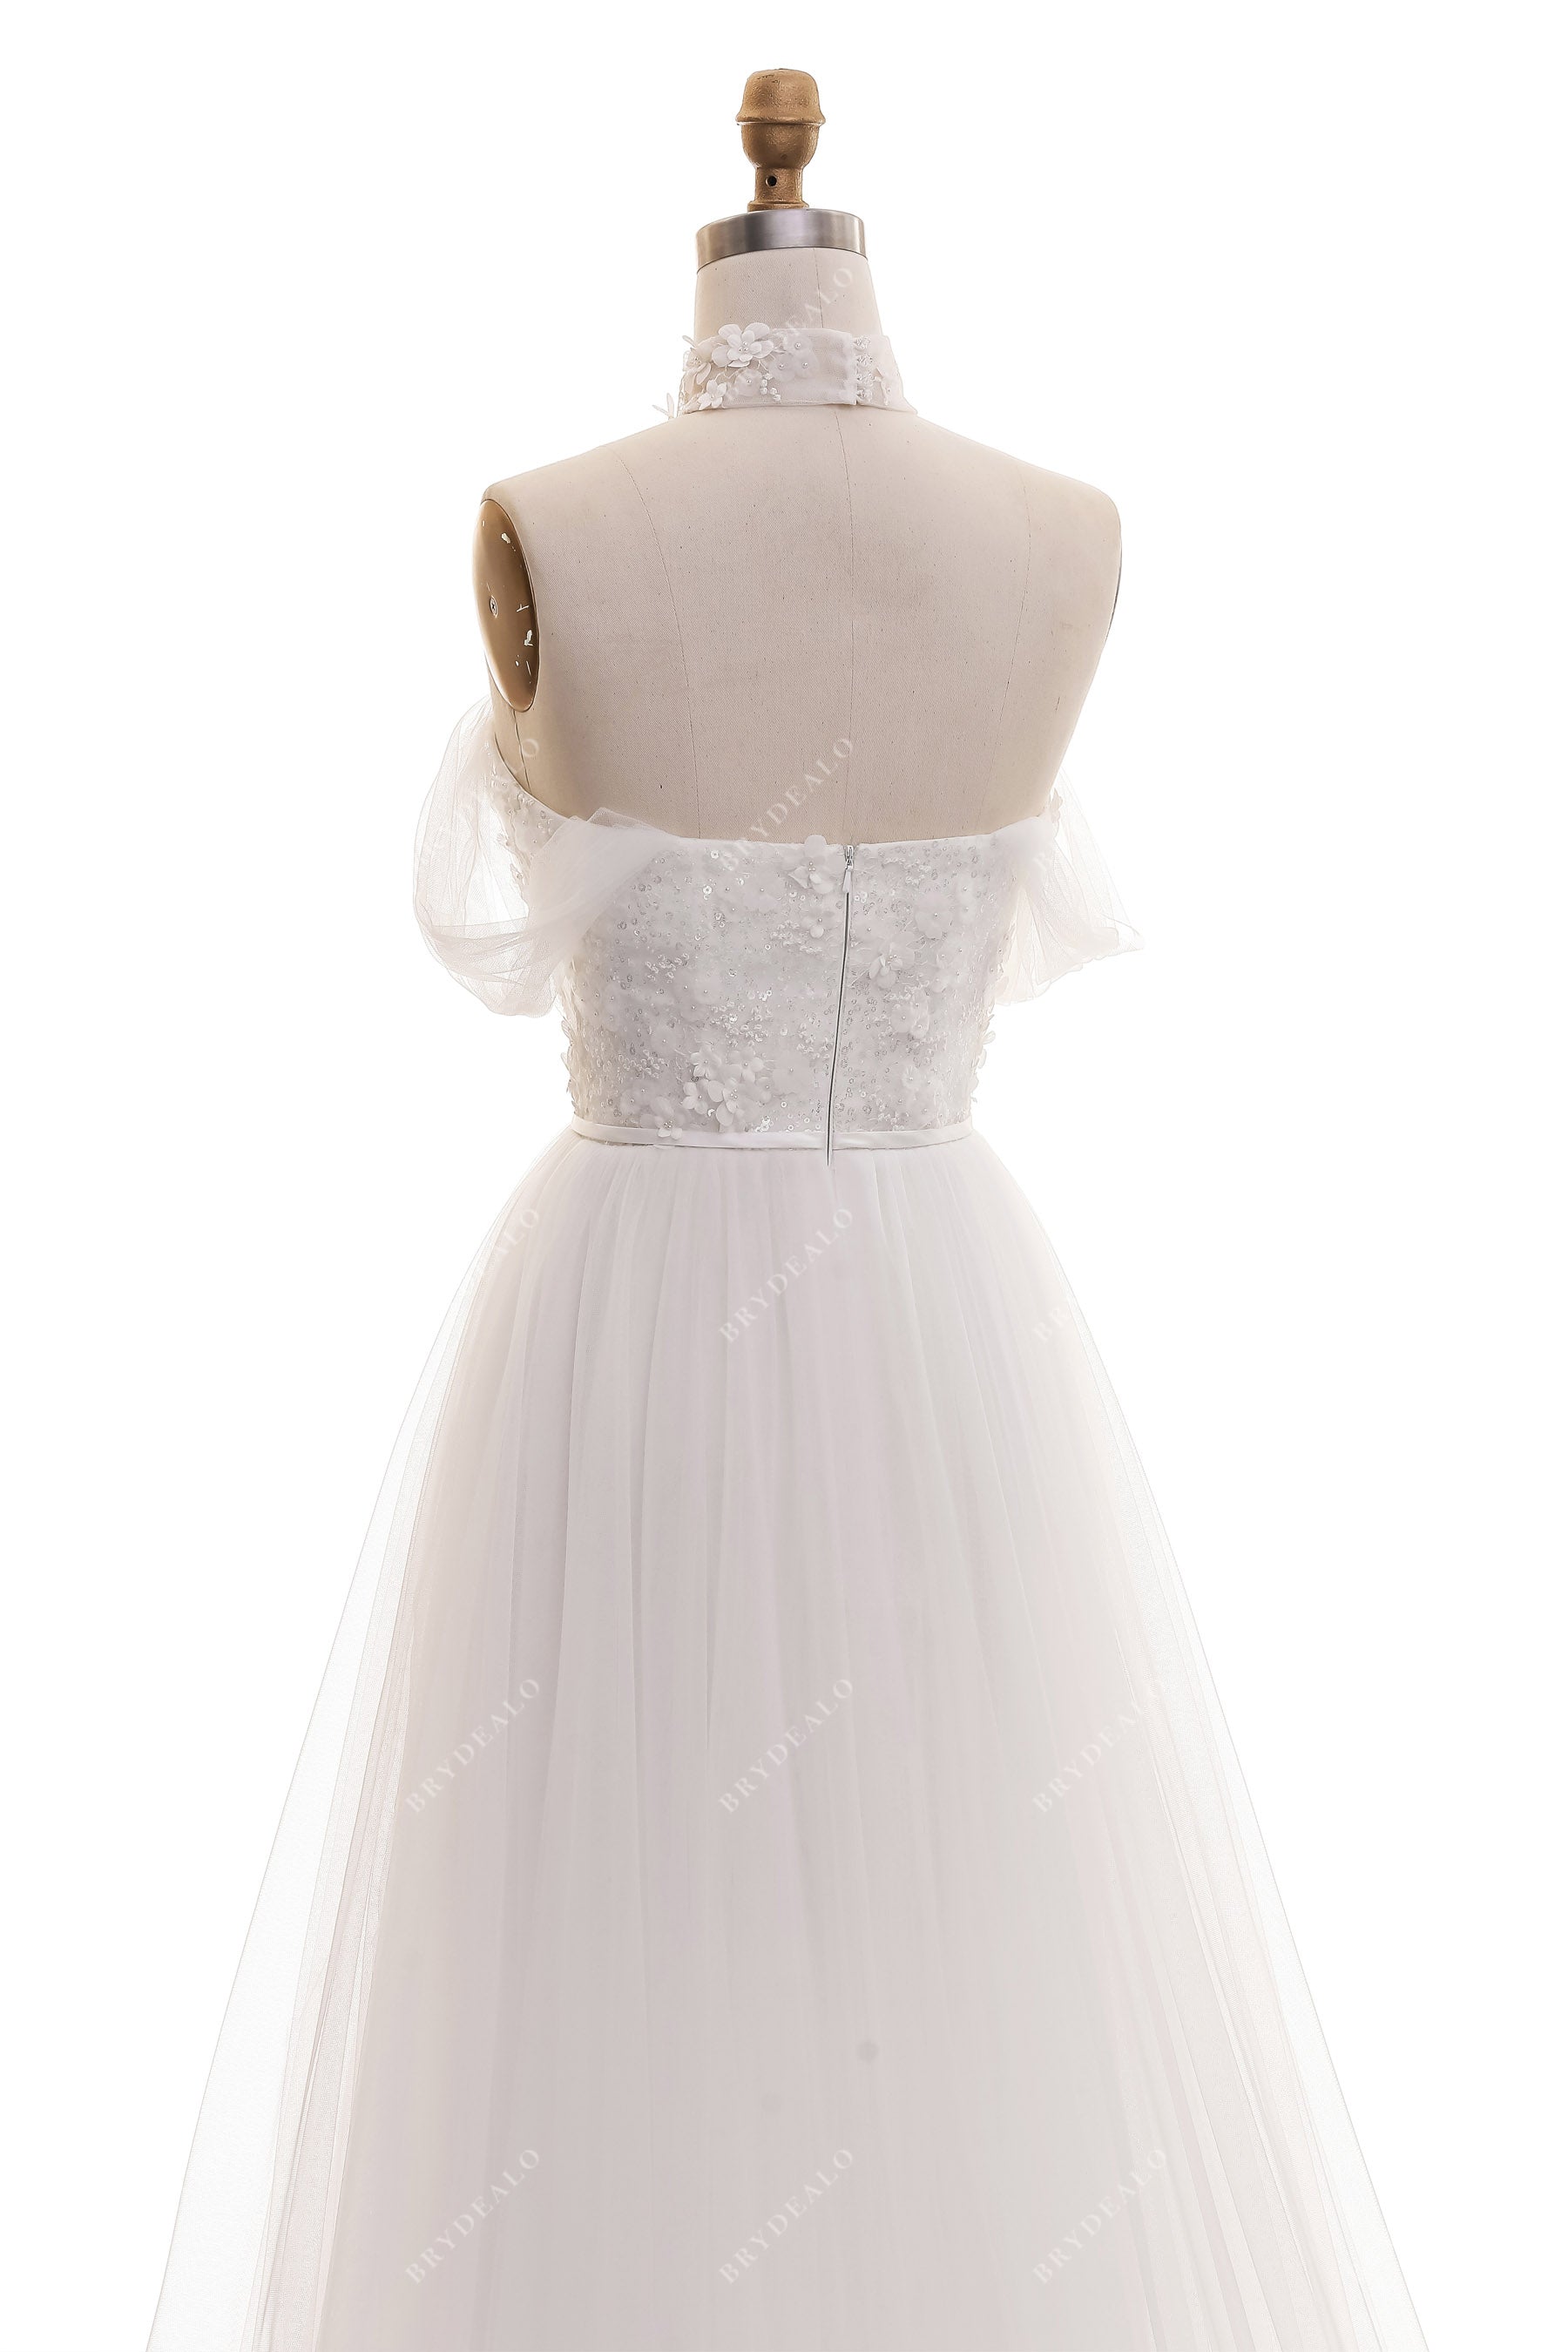 Choker Lace Neck Off the Shoulder Flower Wedding Dress